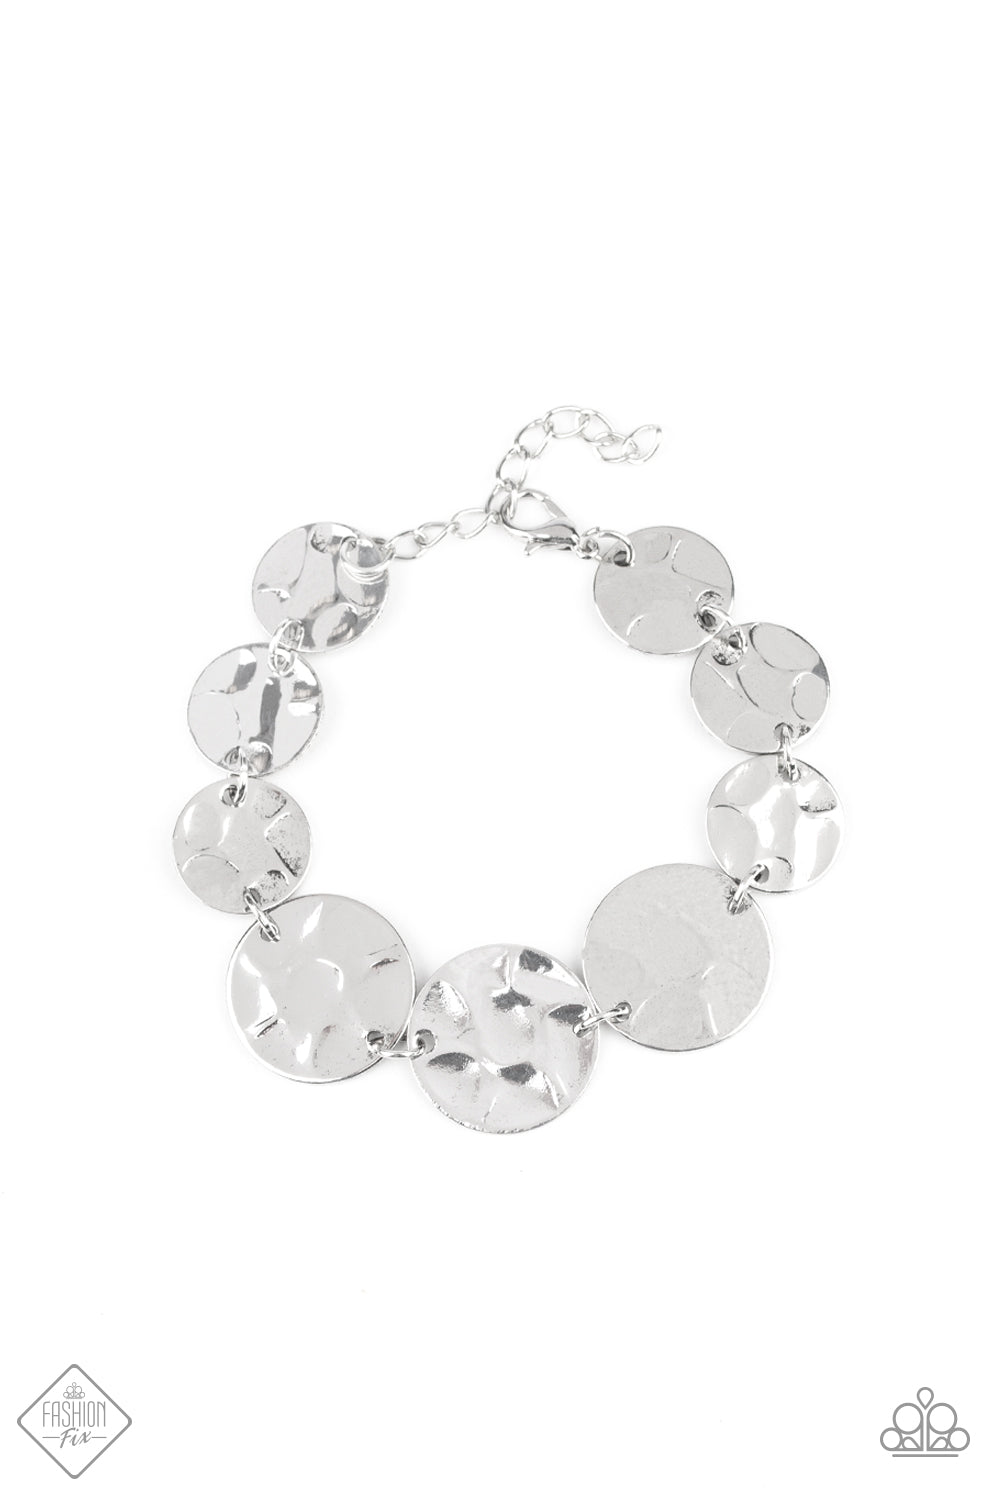 Trinket Trend - silver necklace w/ matching bracelet